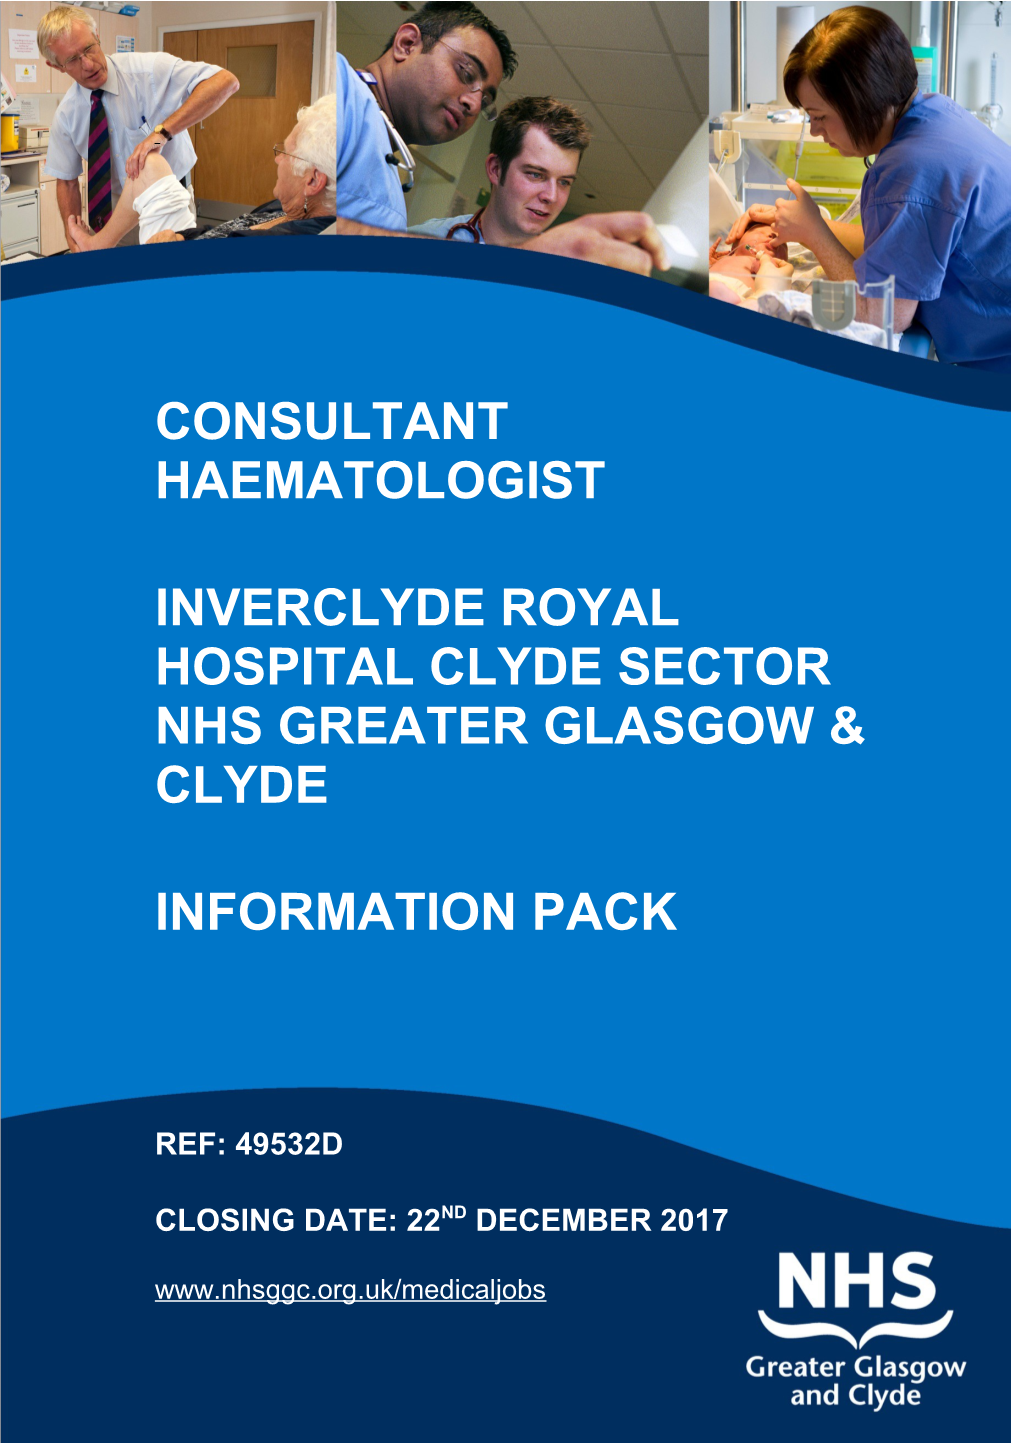 Inverclyde Royal Hospital Clyde Sector